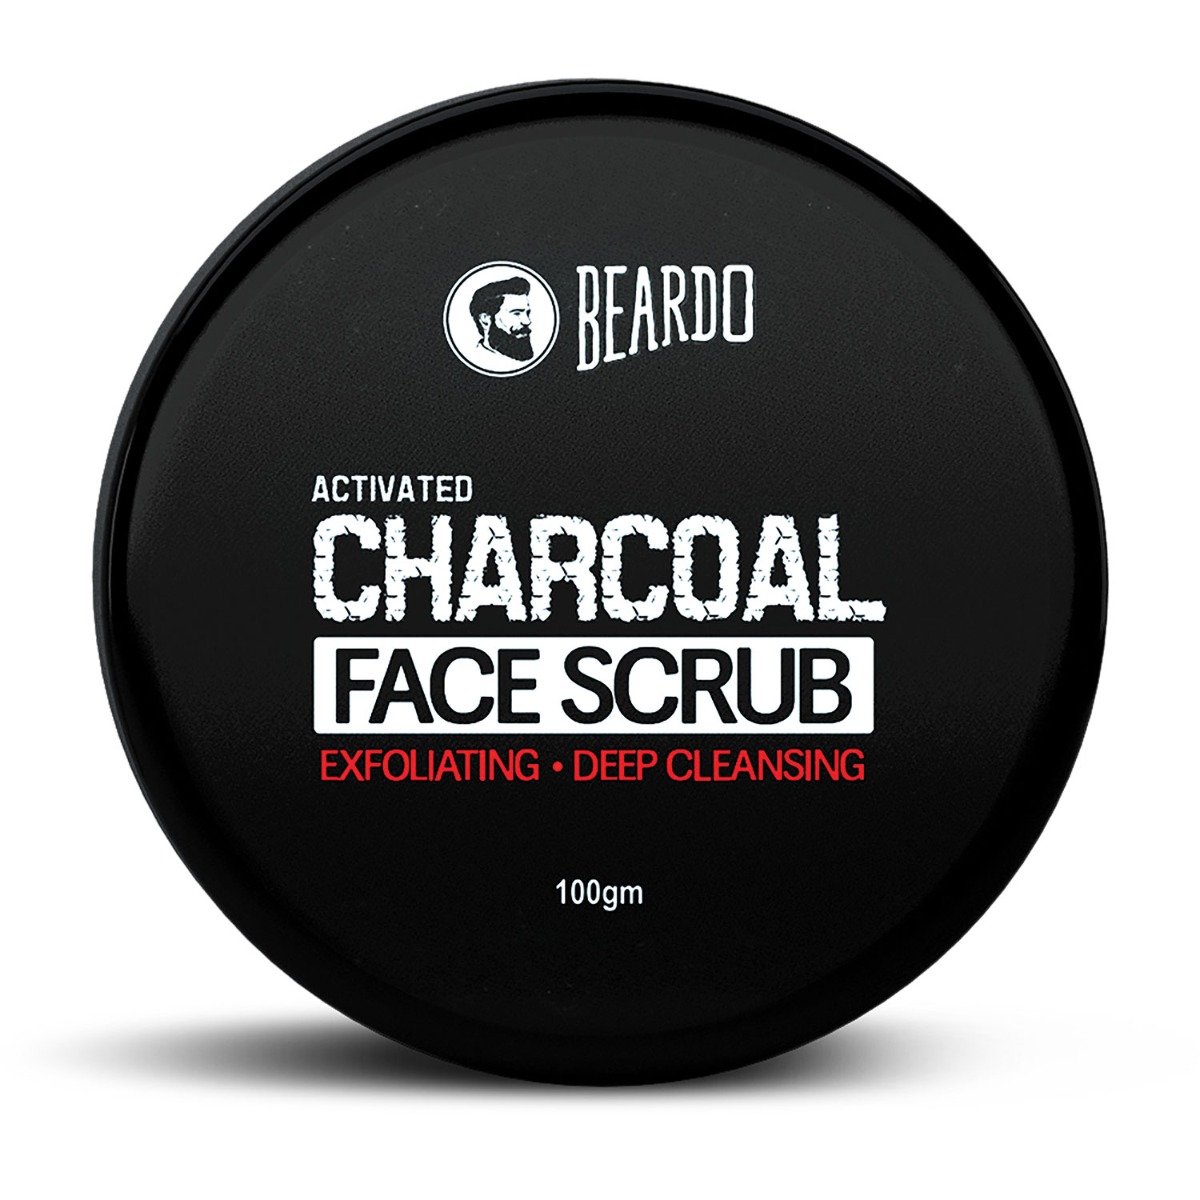 Beardo Activated Charcoal Face Scrub, 100gm